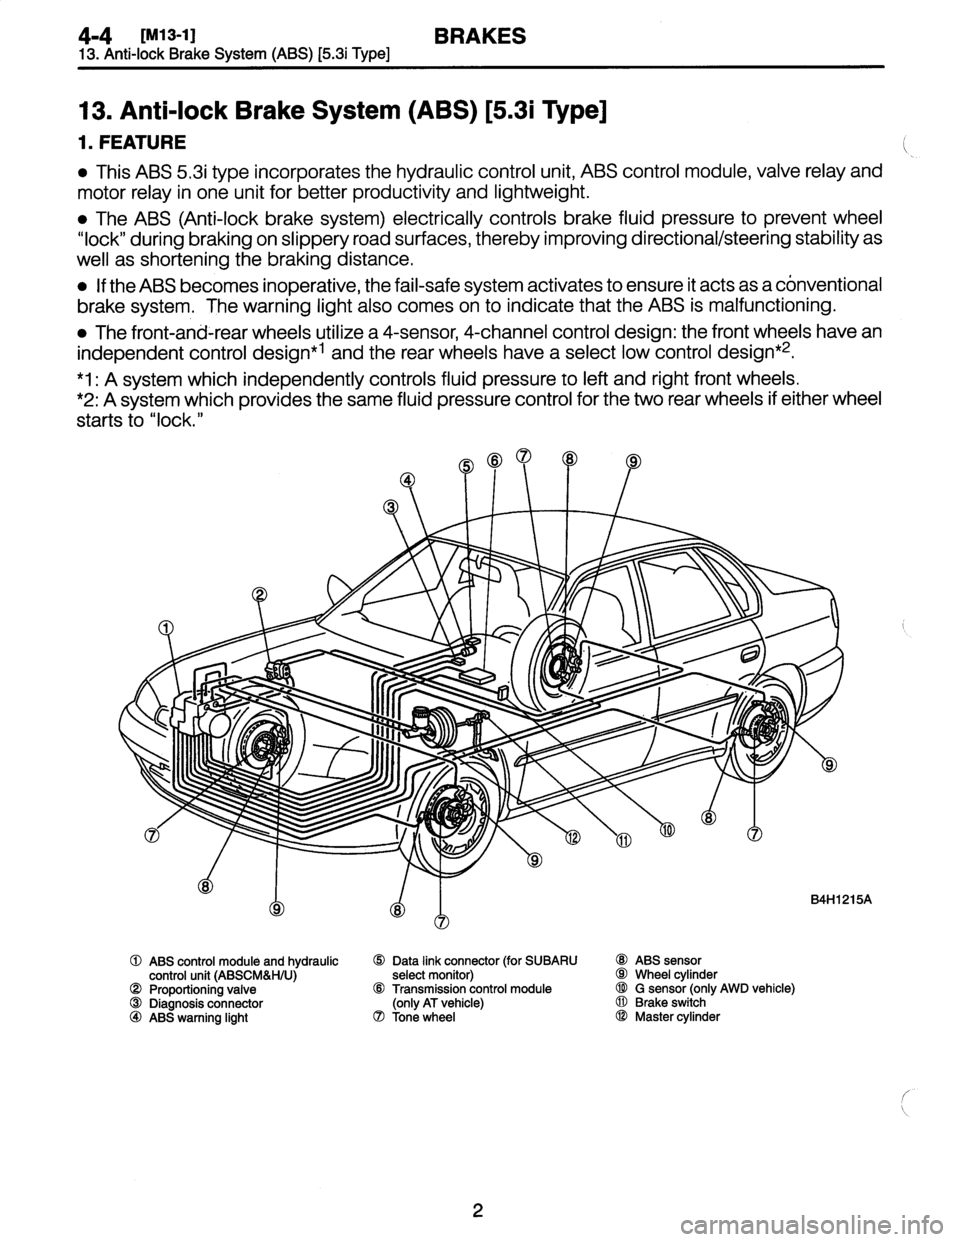 SUBARU LEGACY 1997  Service Repair Manual 4-4
LM13-1]
BRAKES
13
.
Anti-lock
Brake
System
(ABS)
[5
.3i
Type]

13
.
Anti-lock
Brake
System
(ABS)
[5
.3i
Type]

1
.
FEATURE

*
This
ABS
5
.3i
type
incorporates
the
hydraulic
control
unit,
ABS
contr